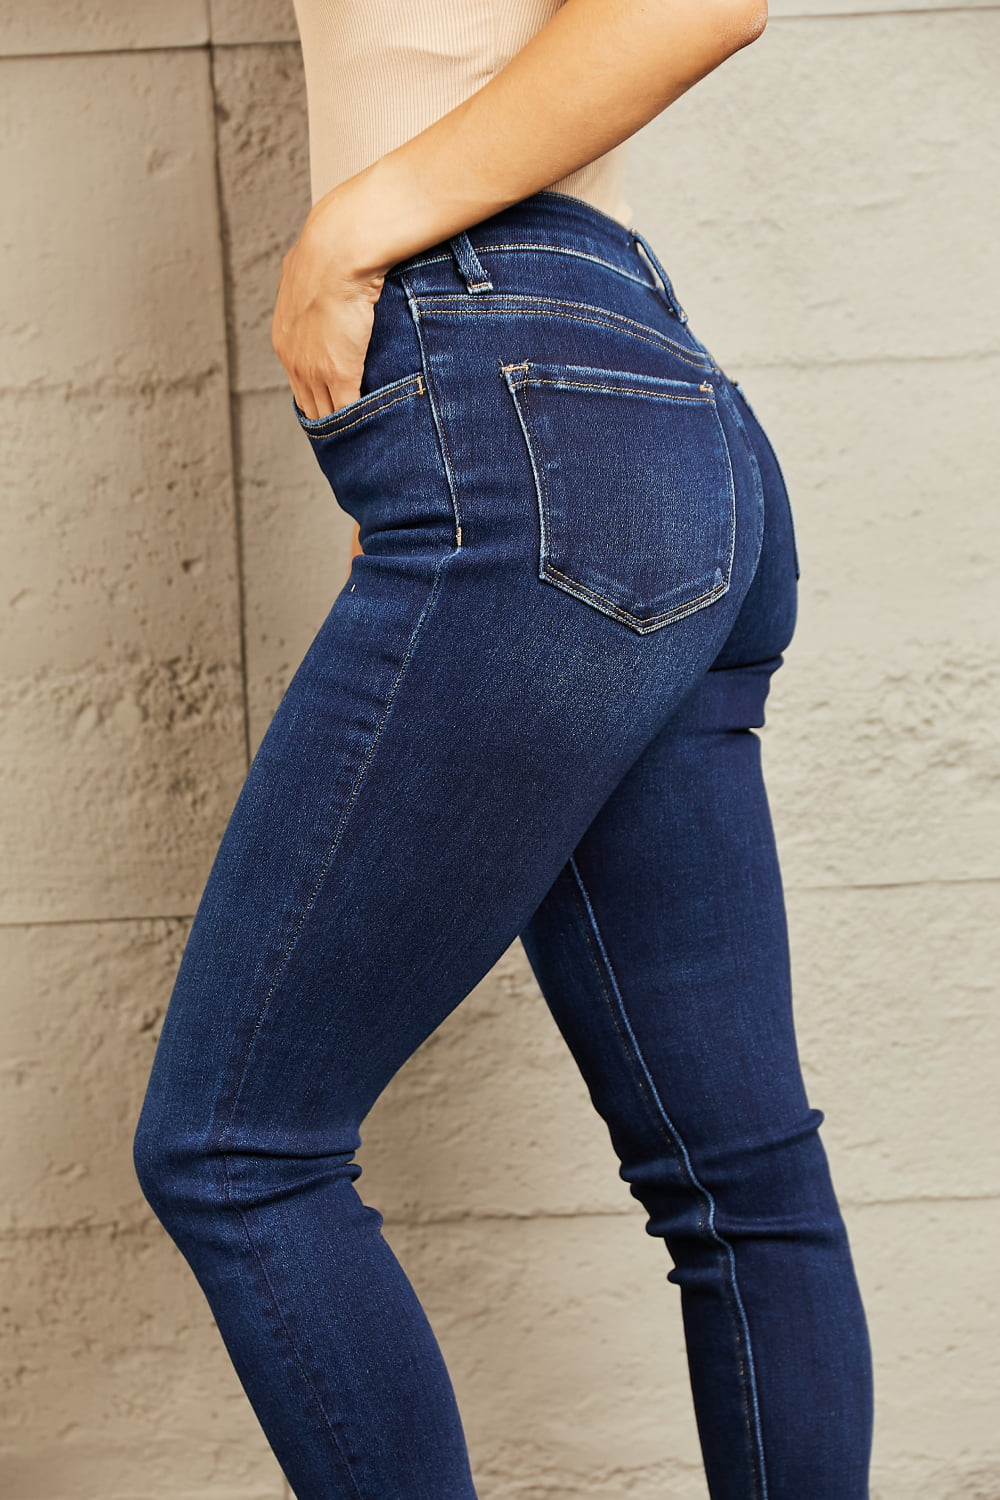 BAYEAS Mid Rise Slim Jeans - Alonna's Legging Land